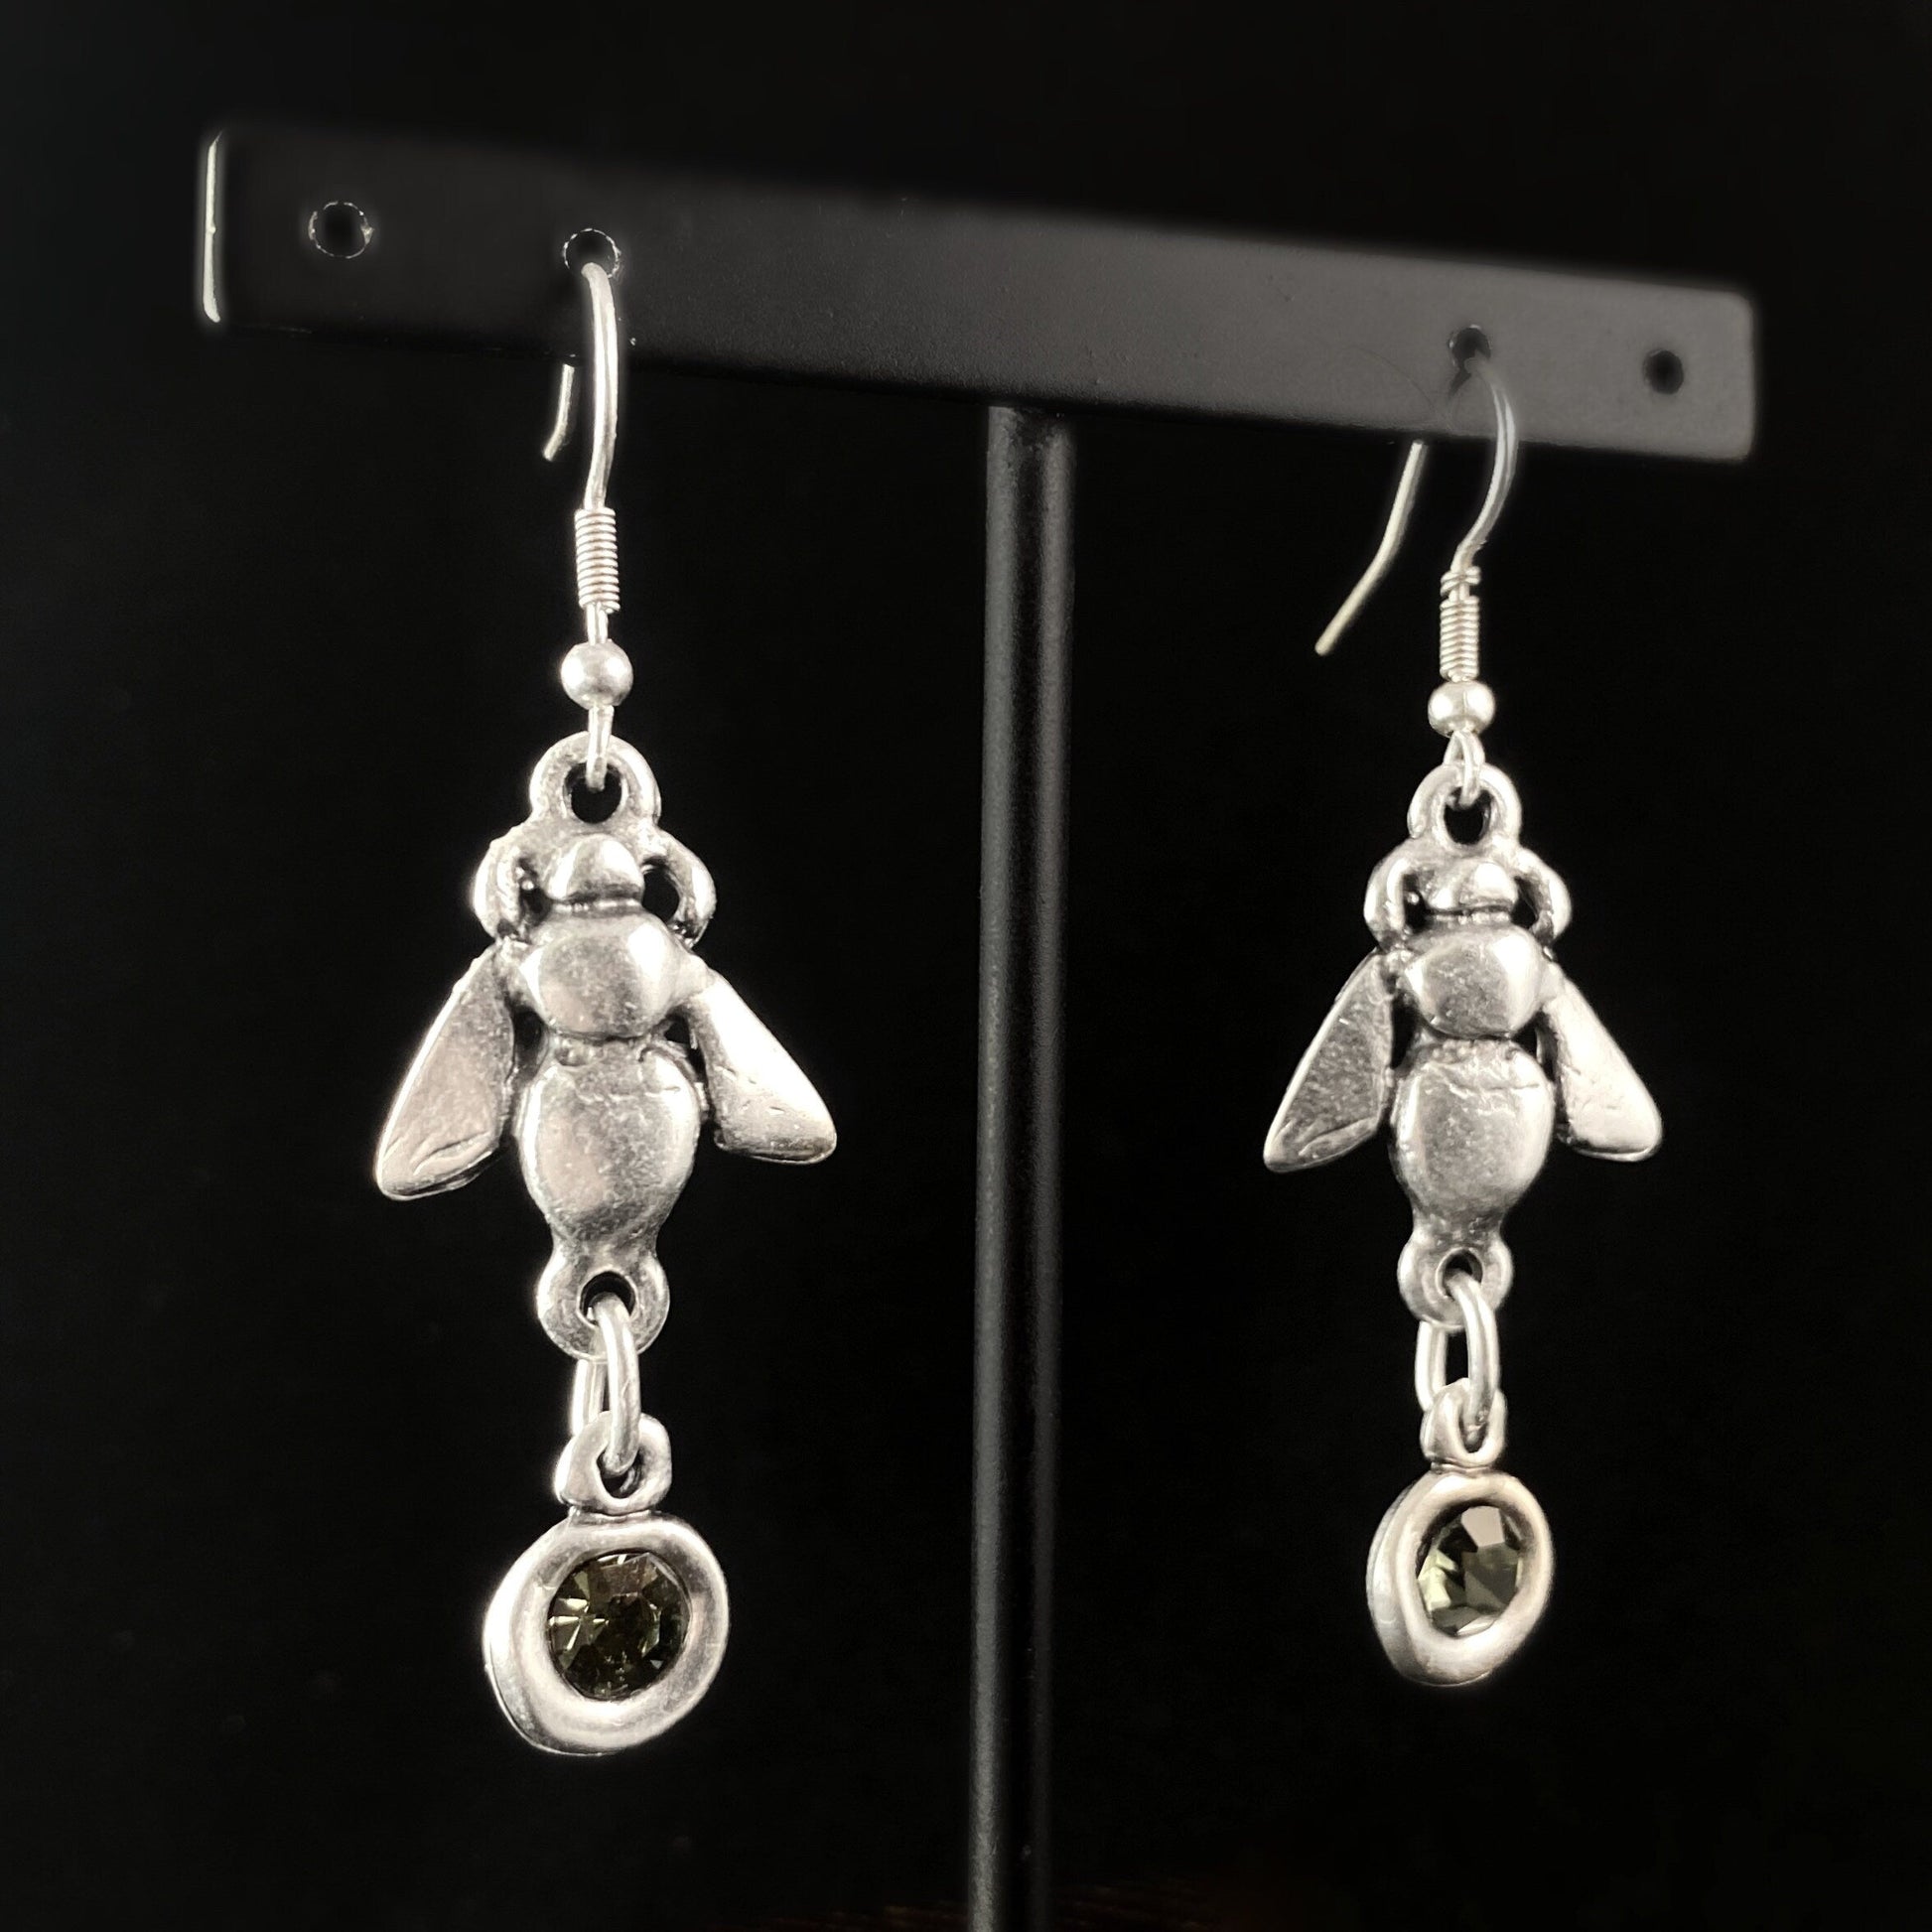 Silver Honey Bee Drop Earrings with Crystal Detailing, Handmade, Nickel Free - Elegant Minimalist Jewelry for Women